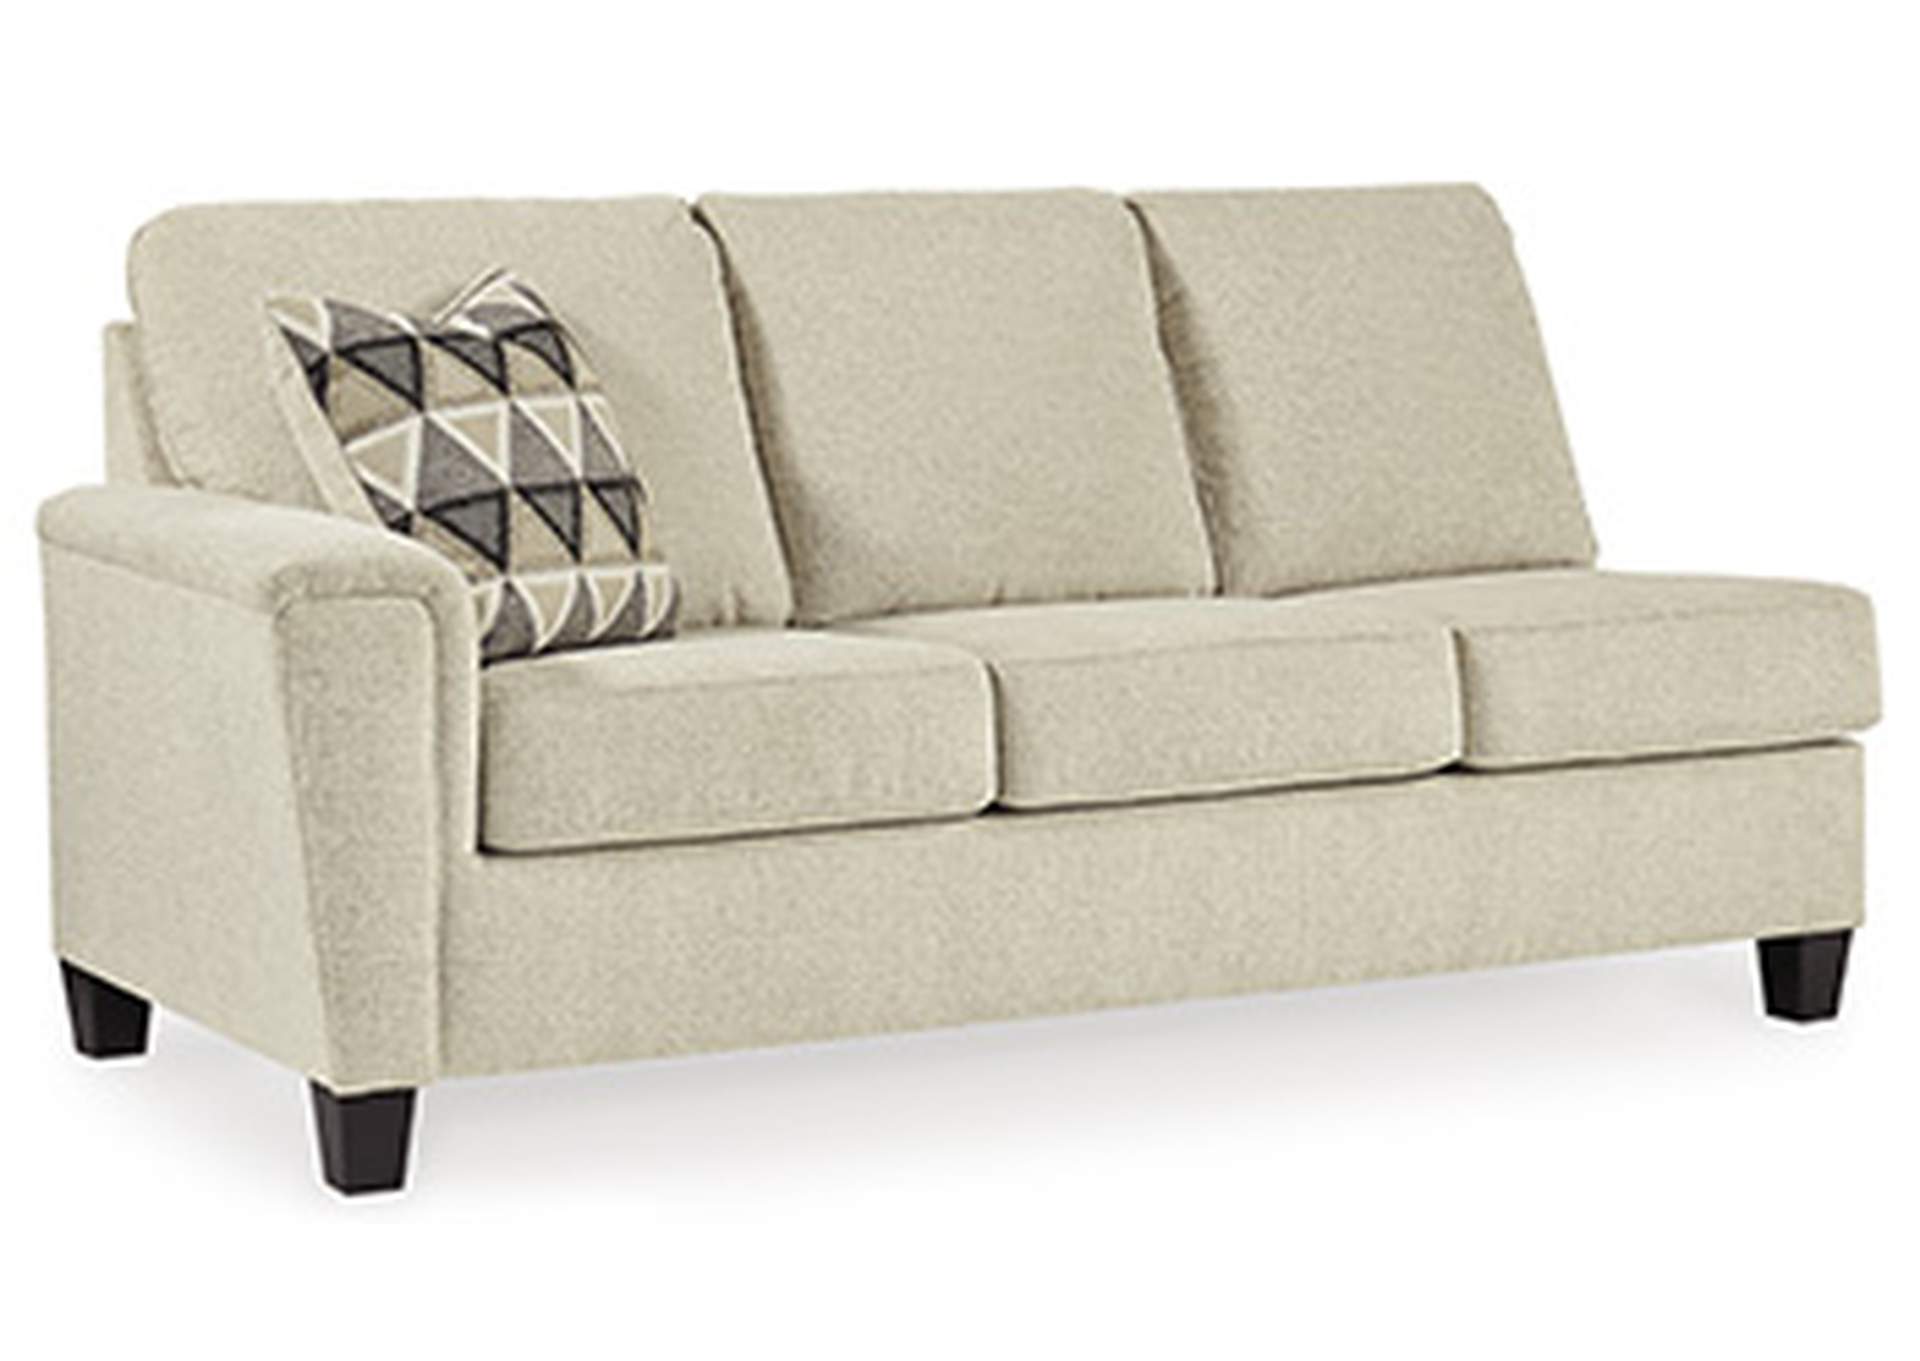 Abinger Left-Arm Facing Sofa,Signature Design By Ashley